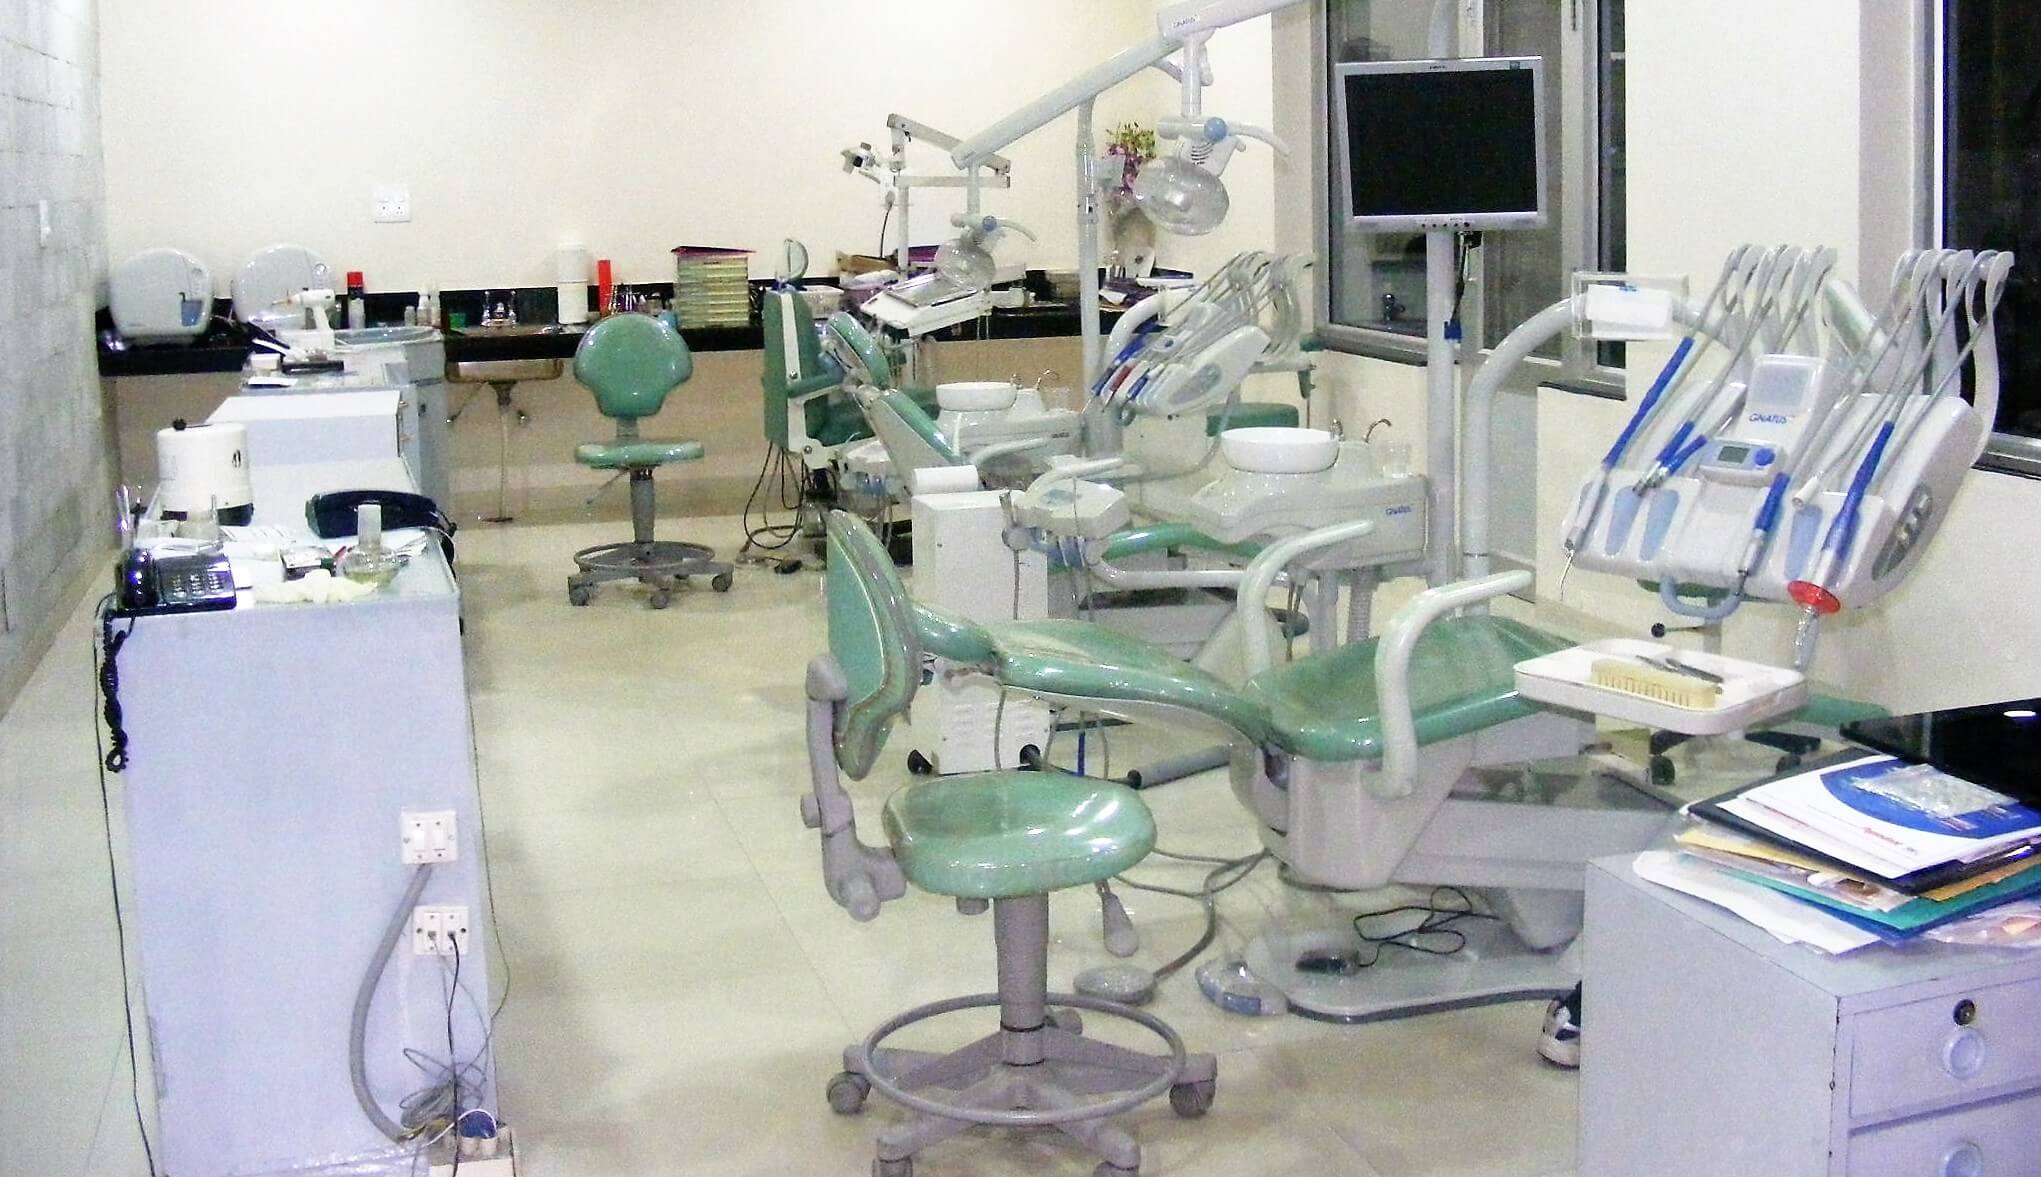 Top 10 Dental Clinics (Dentists) in Ludhiana - Exclusive List